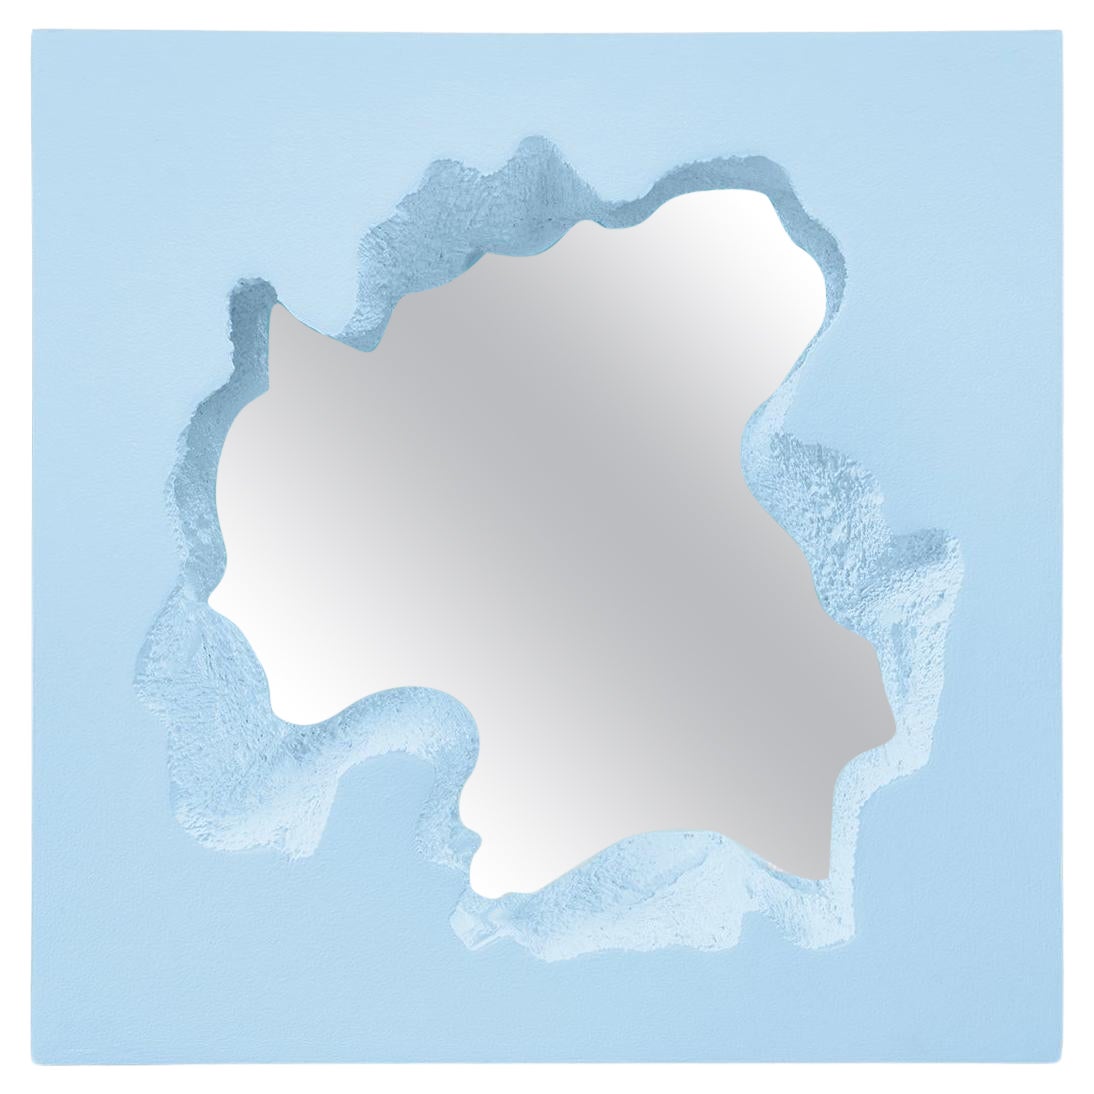 Gufram Broken Square Mirror by Snarkitecture - Blue edition 1/33 For Sale